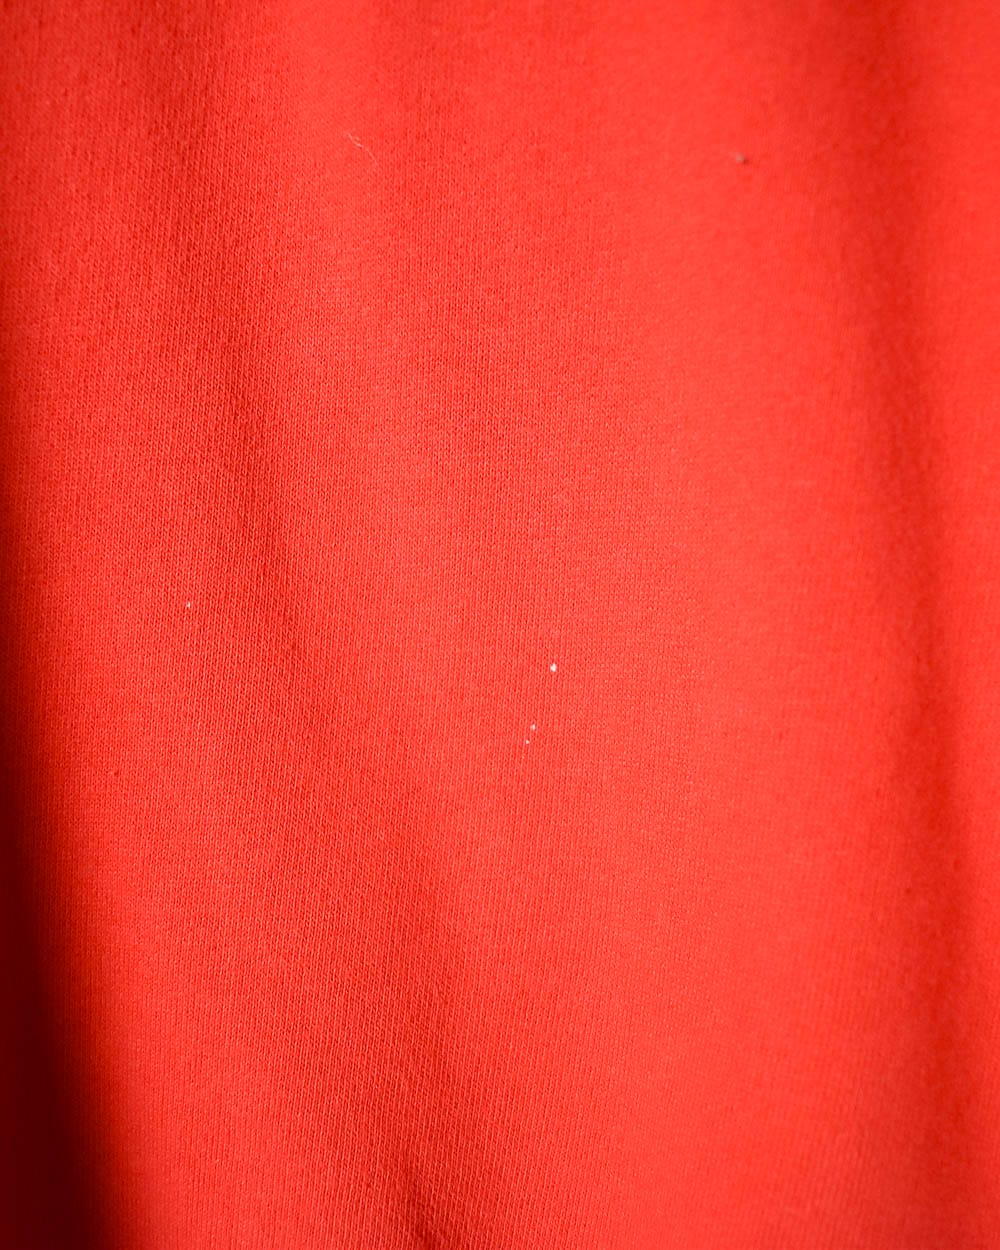 Red Fila Sweatshirt - Medium